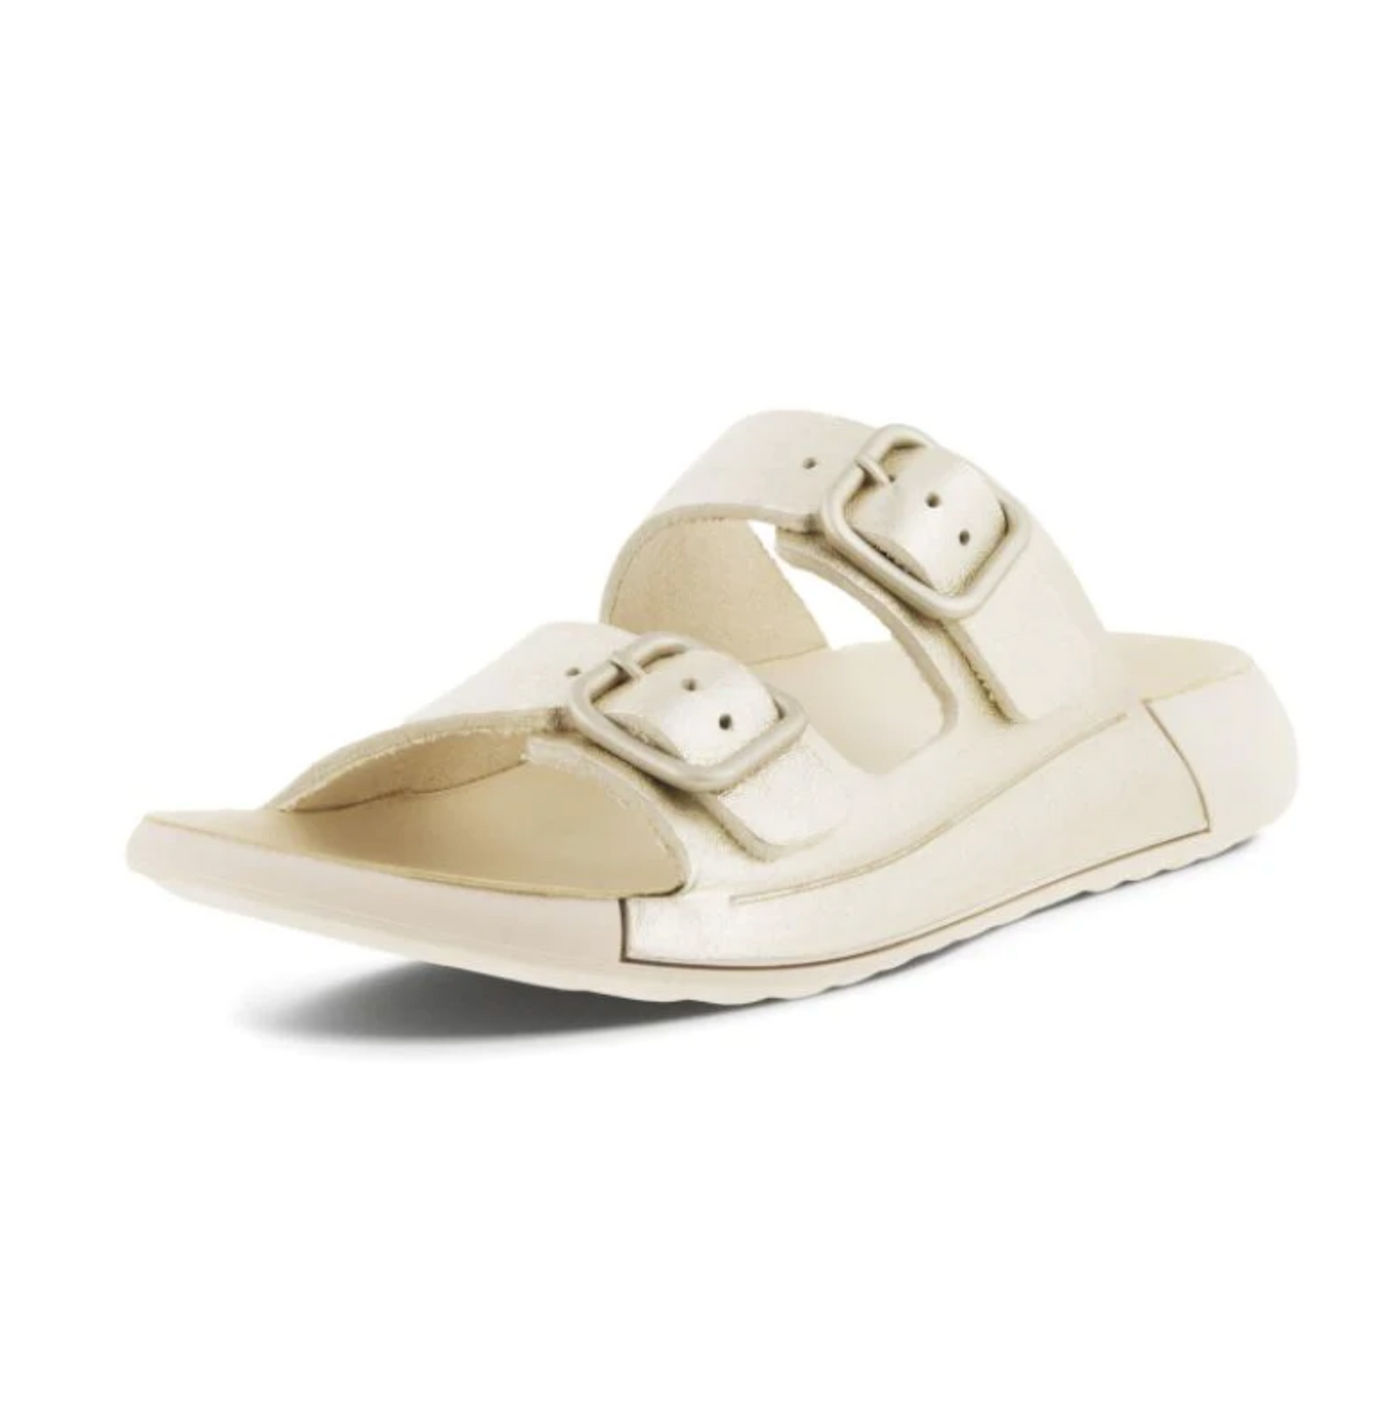 ECCO COZMO PURE WHITE GOLD - Women slippers - Collective Shoes 